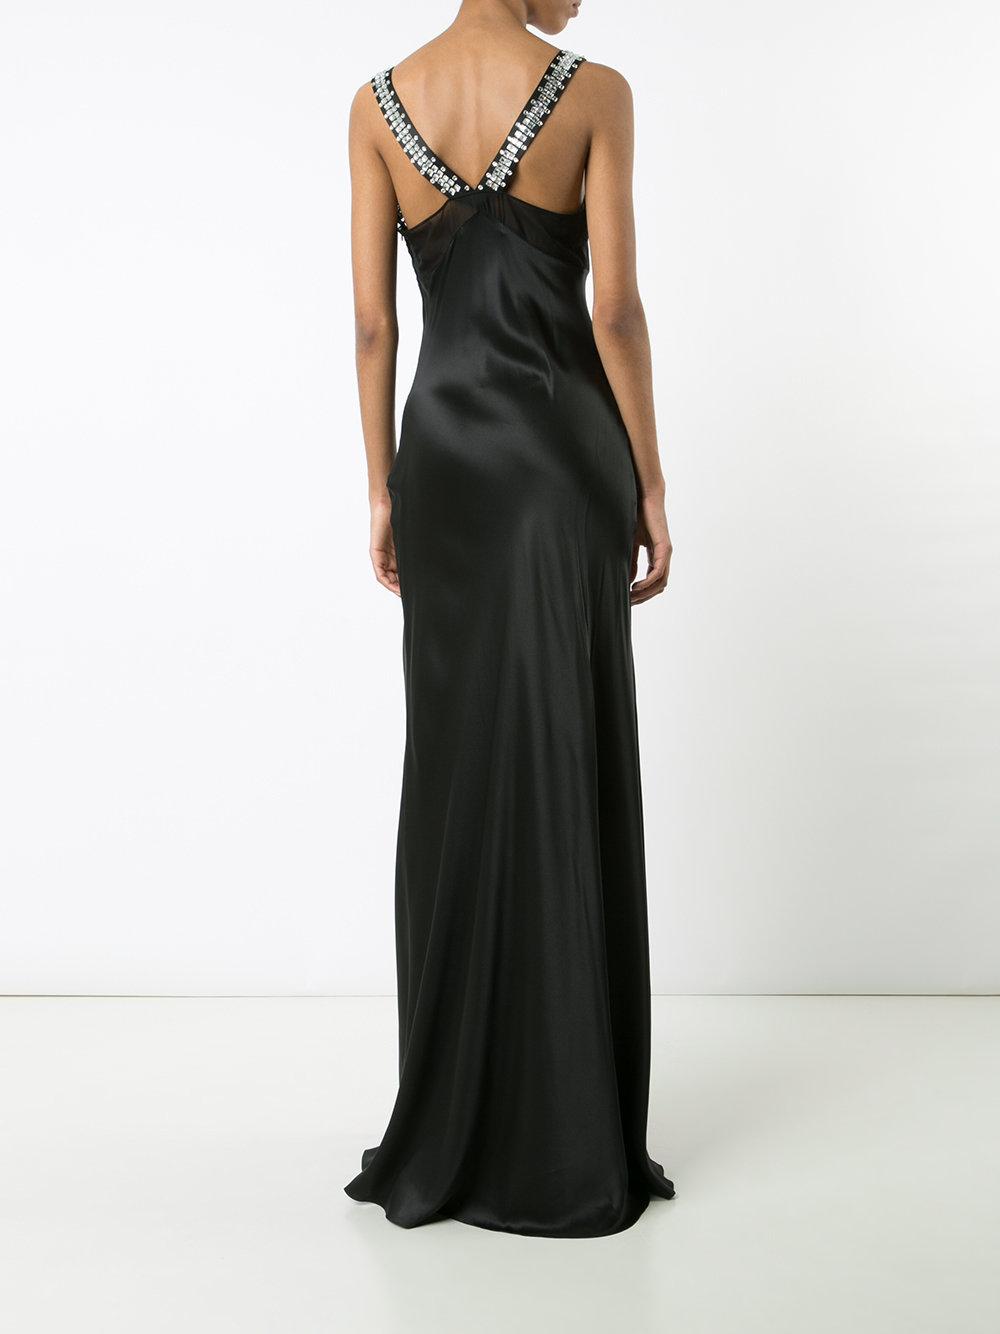 Givenchy Black Zipper Dress : Lyst - Givenchy Studded Lace-inset Mini ...